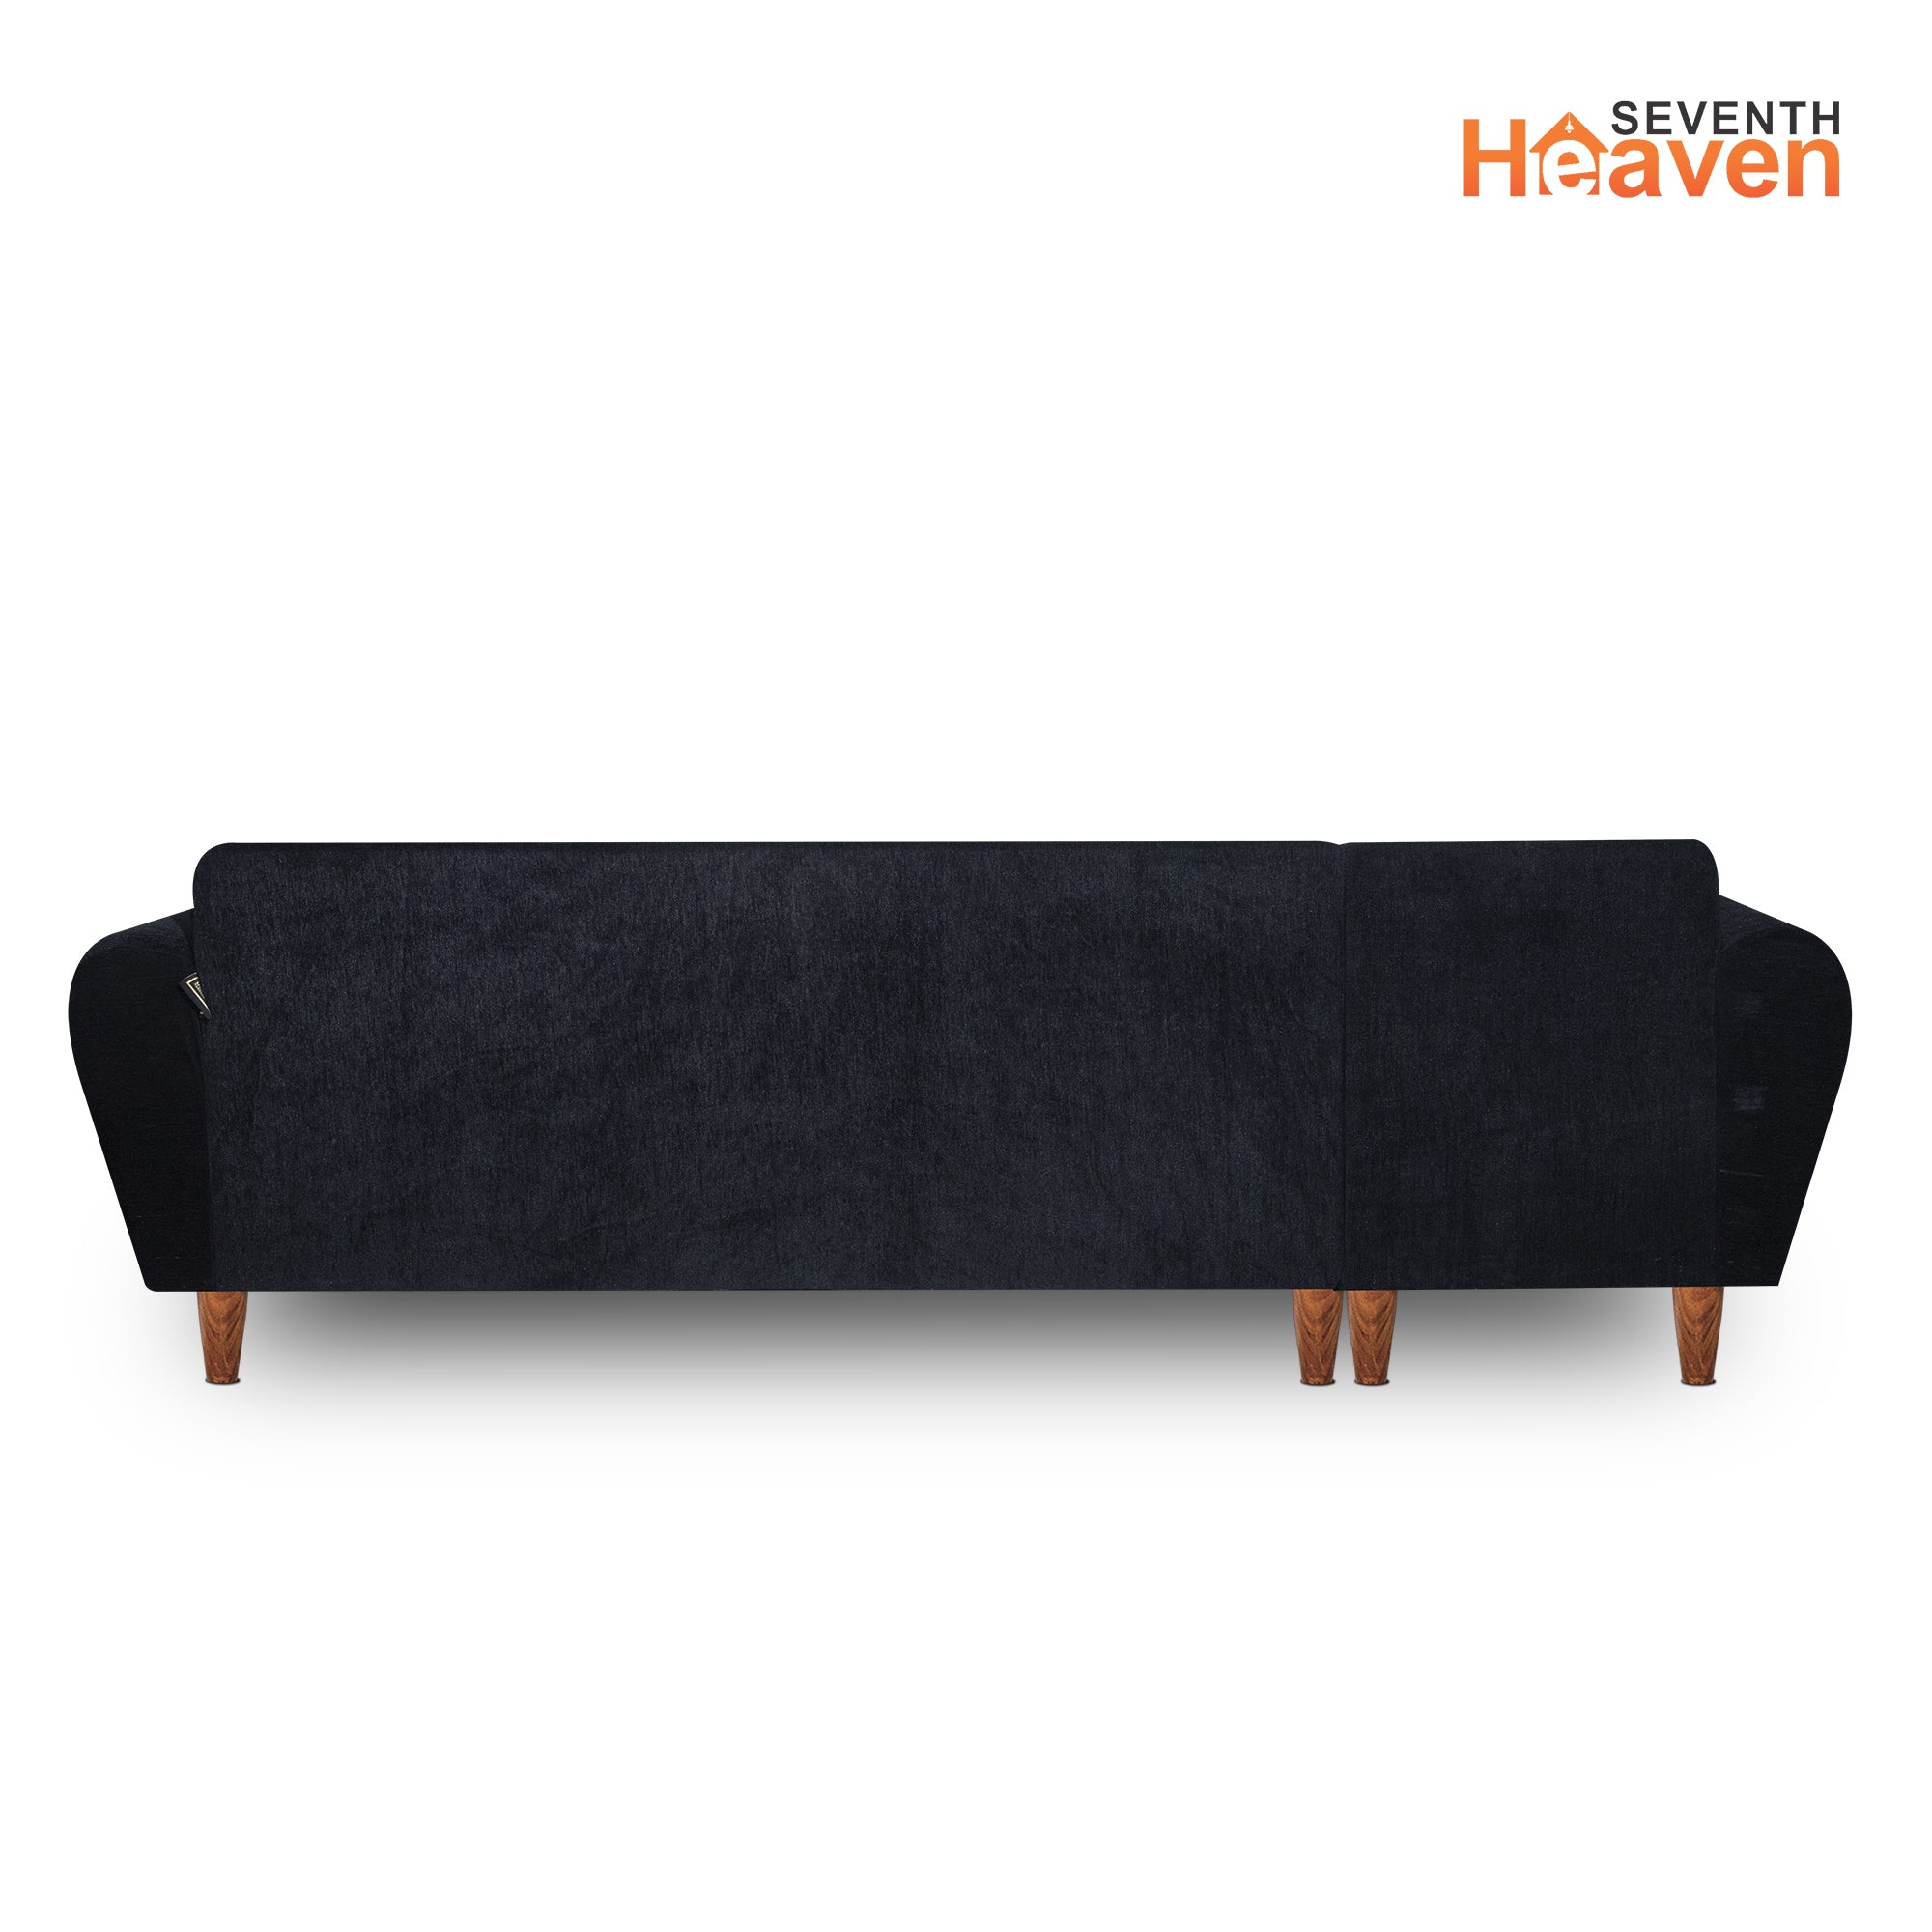 Seventh Heaven Milan 6 Seater Sofa, Extra Spacious, Chenille Molfino Fabric: 3 Year Warranty Fabric 6 Seater Sofa  (Finish Color - Black, DIY(Do-It-Yourself))